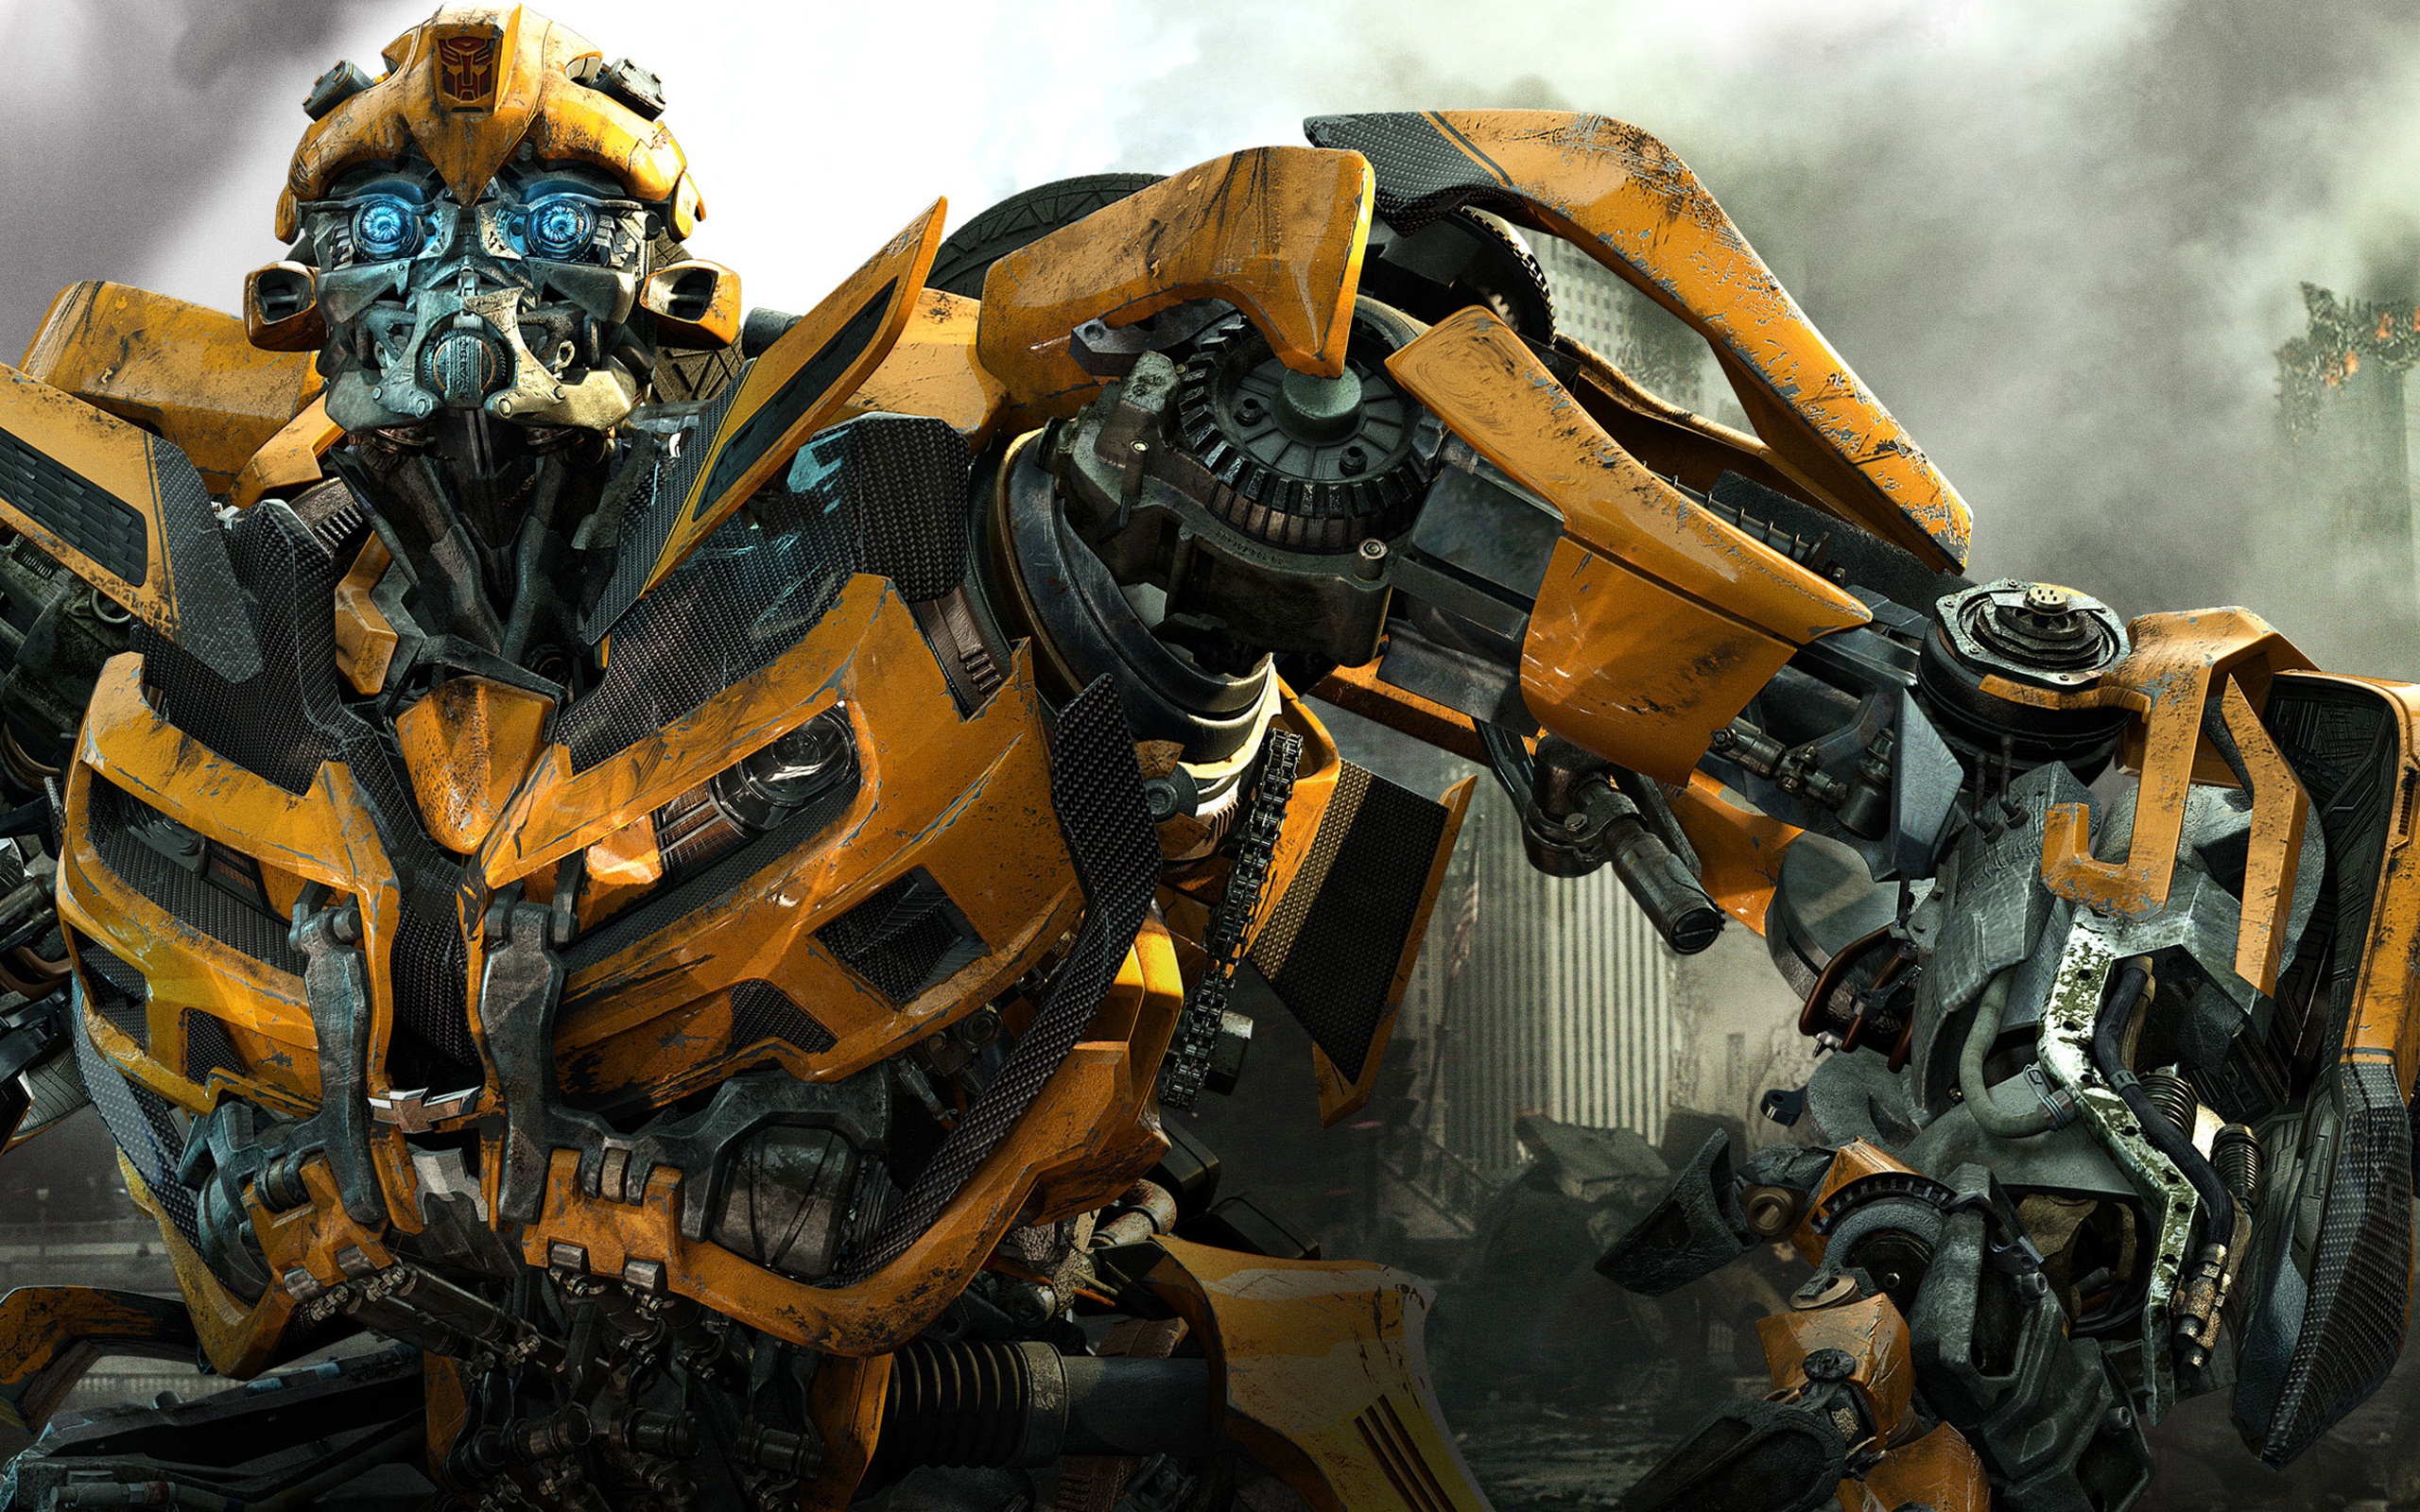 Transformers Bumblebee wallpaper in 360x720 resolution